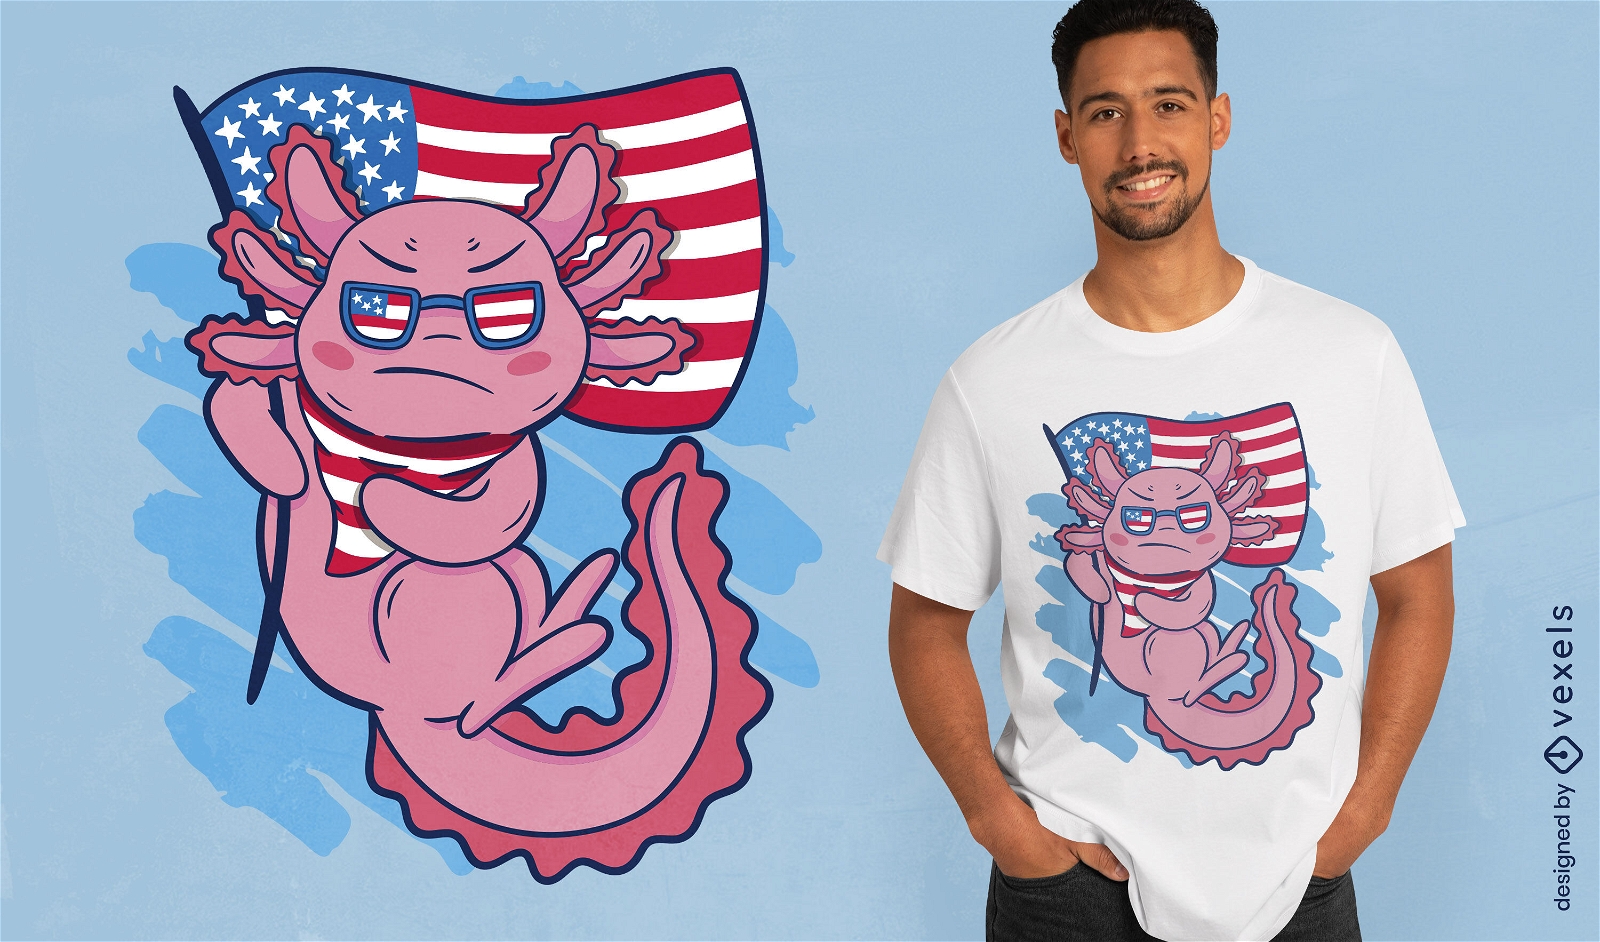 Axolotl and american flag t-shirt design